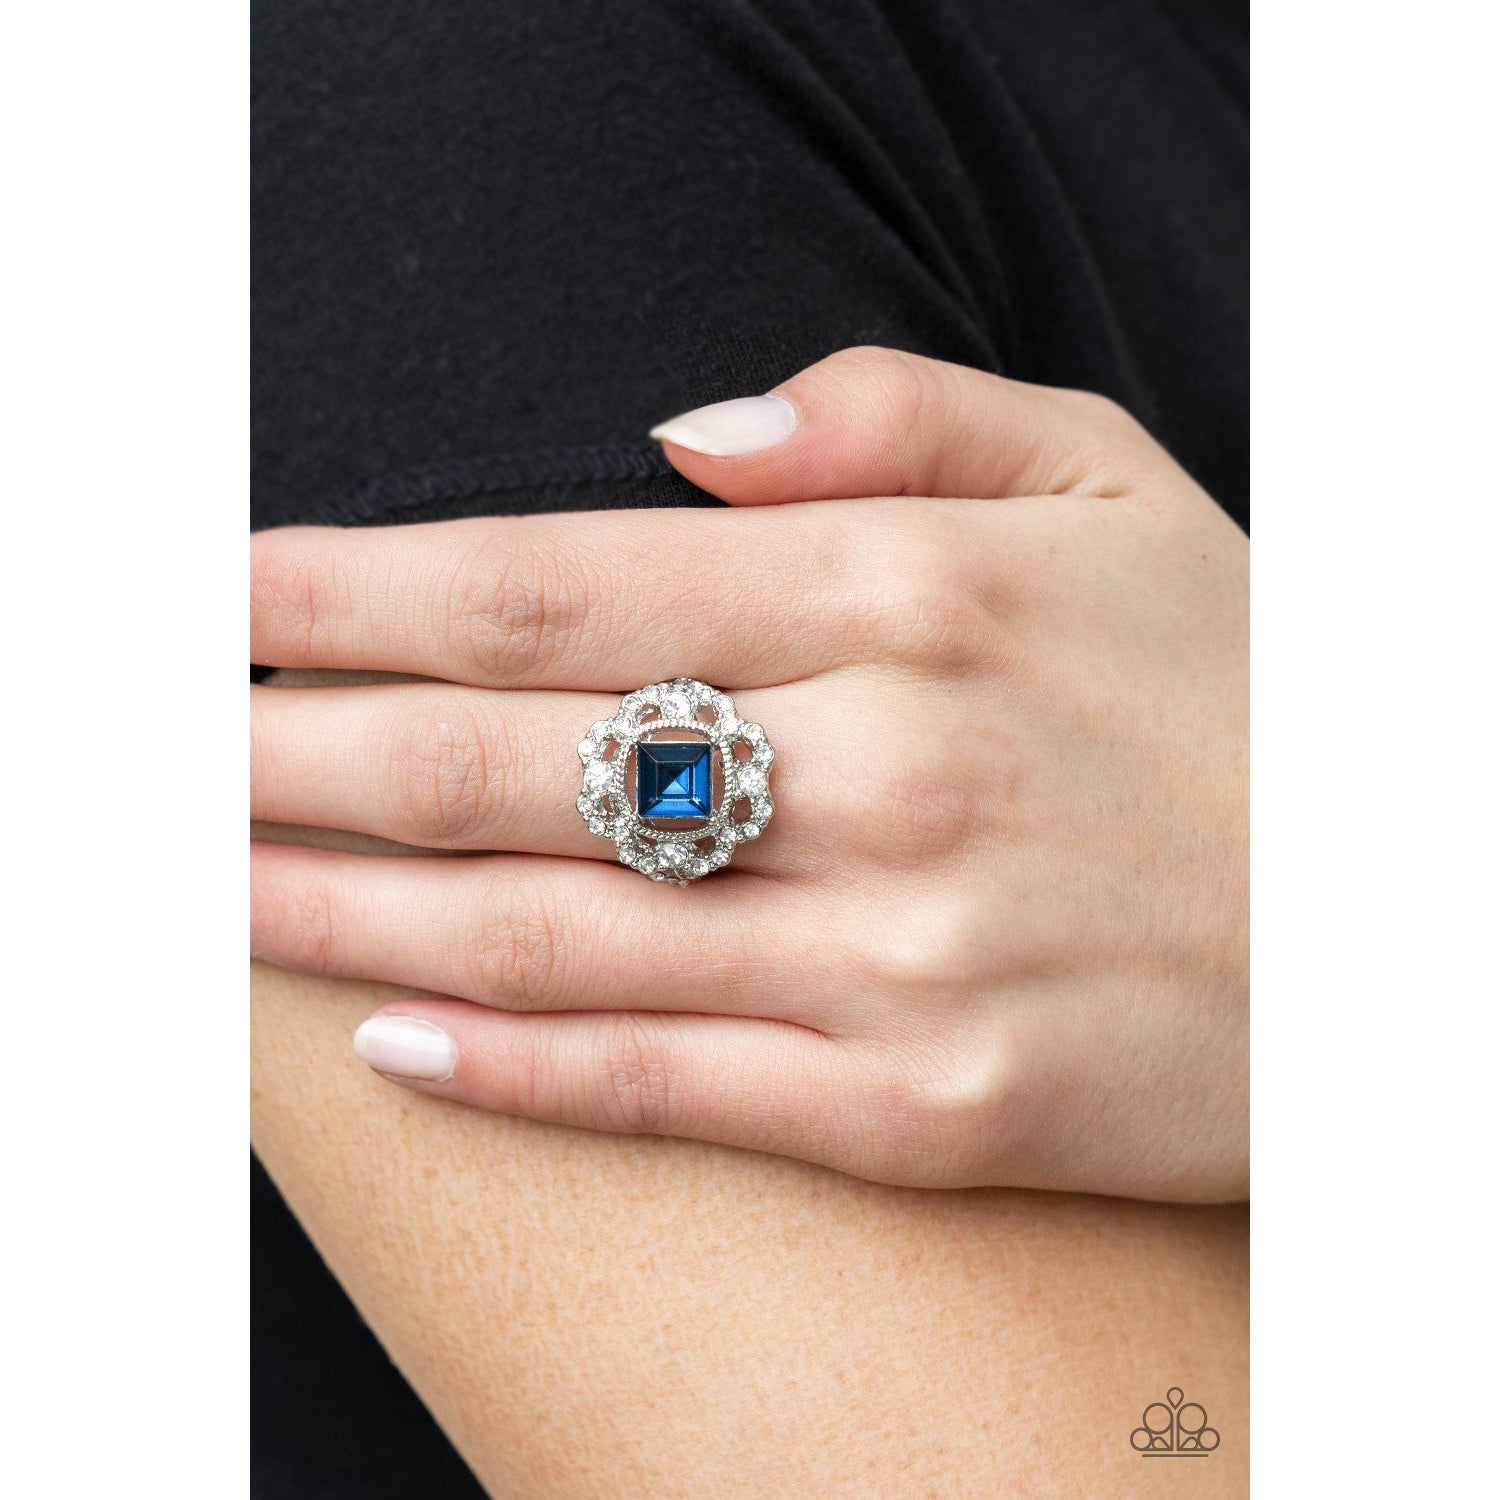 Candid Charisma - Blue Ring - Paparazzi Accessories - GlaMarous Titi Jewels